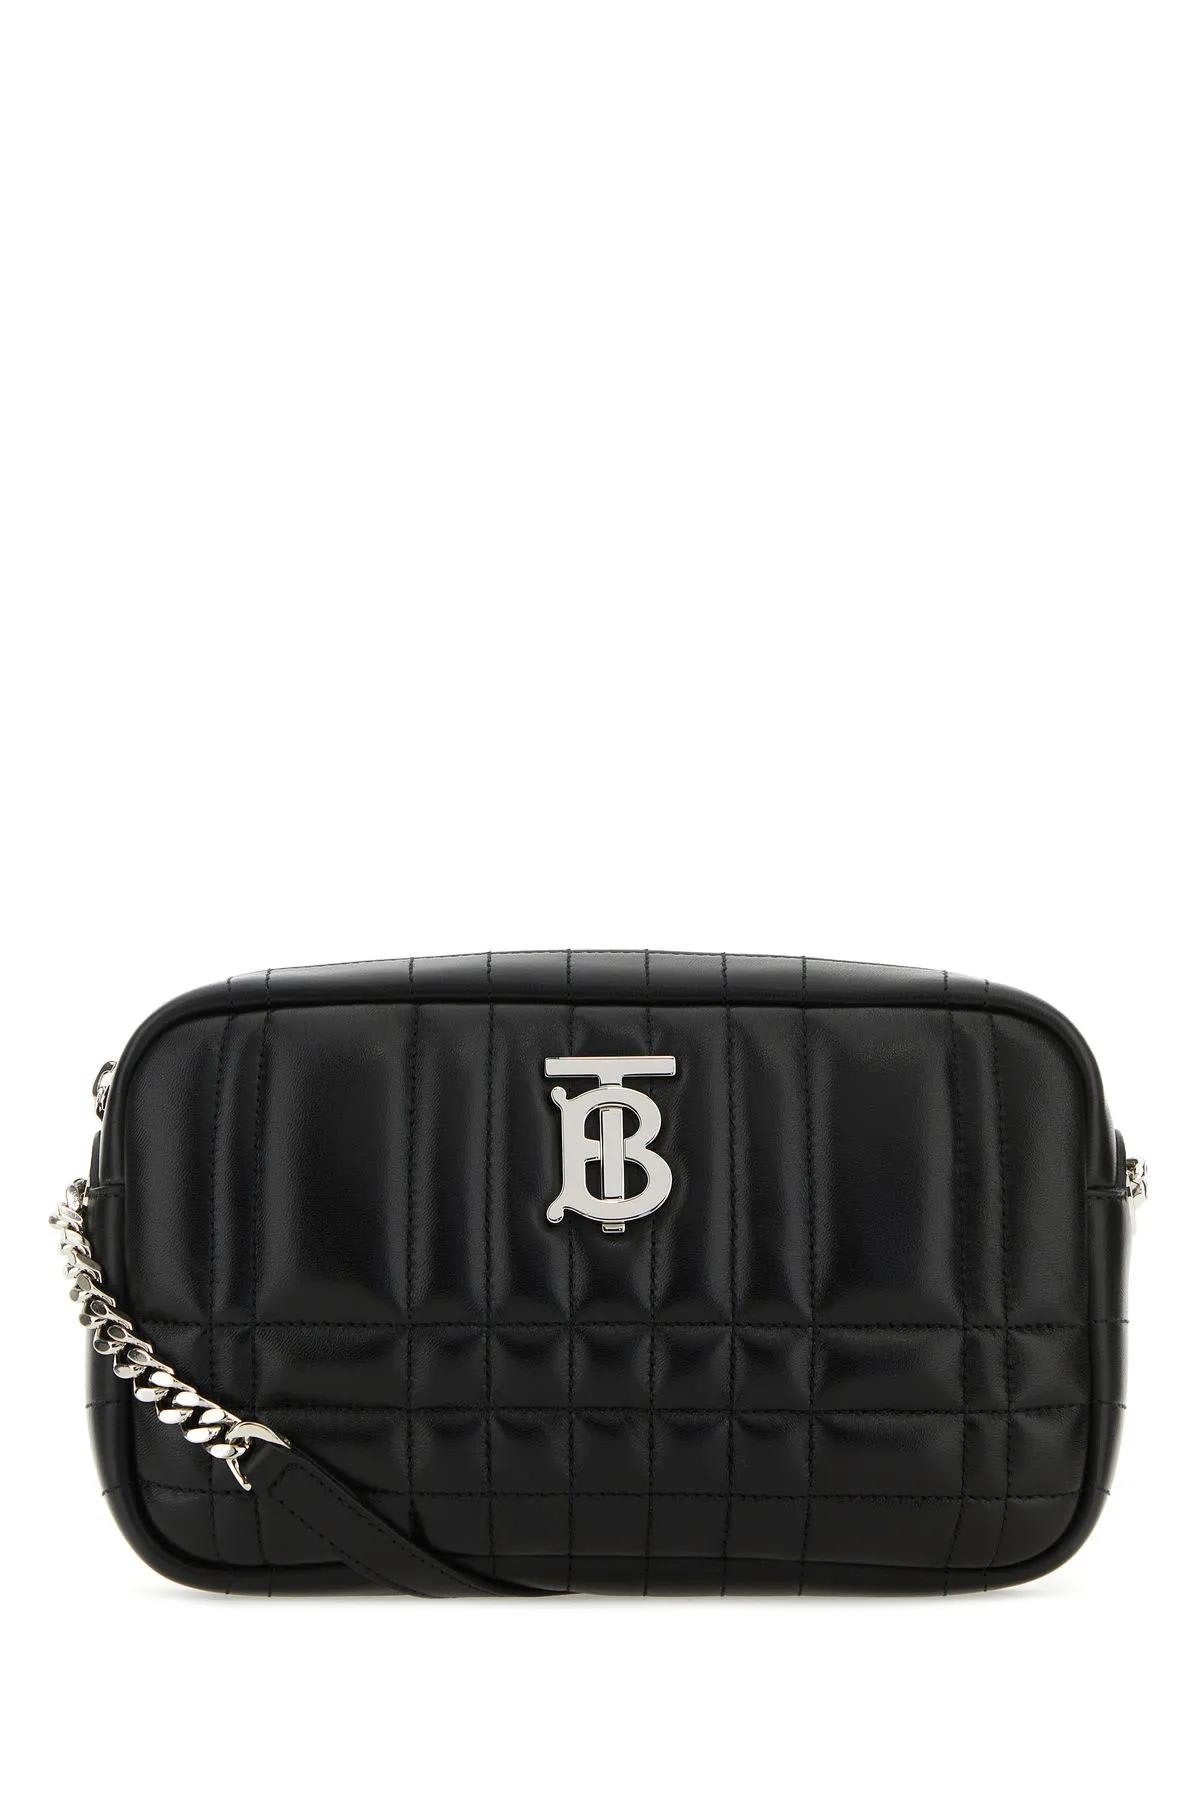 Burberry Black Leather Small Lola Crossbody Bag In Black 2